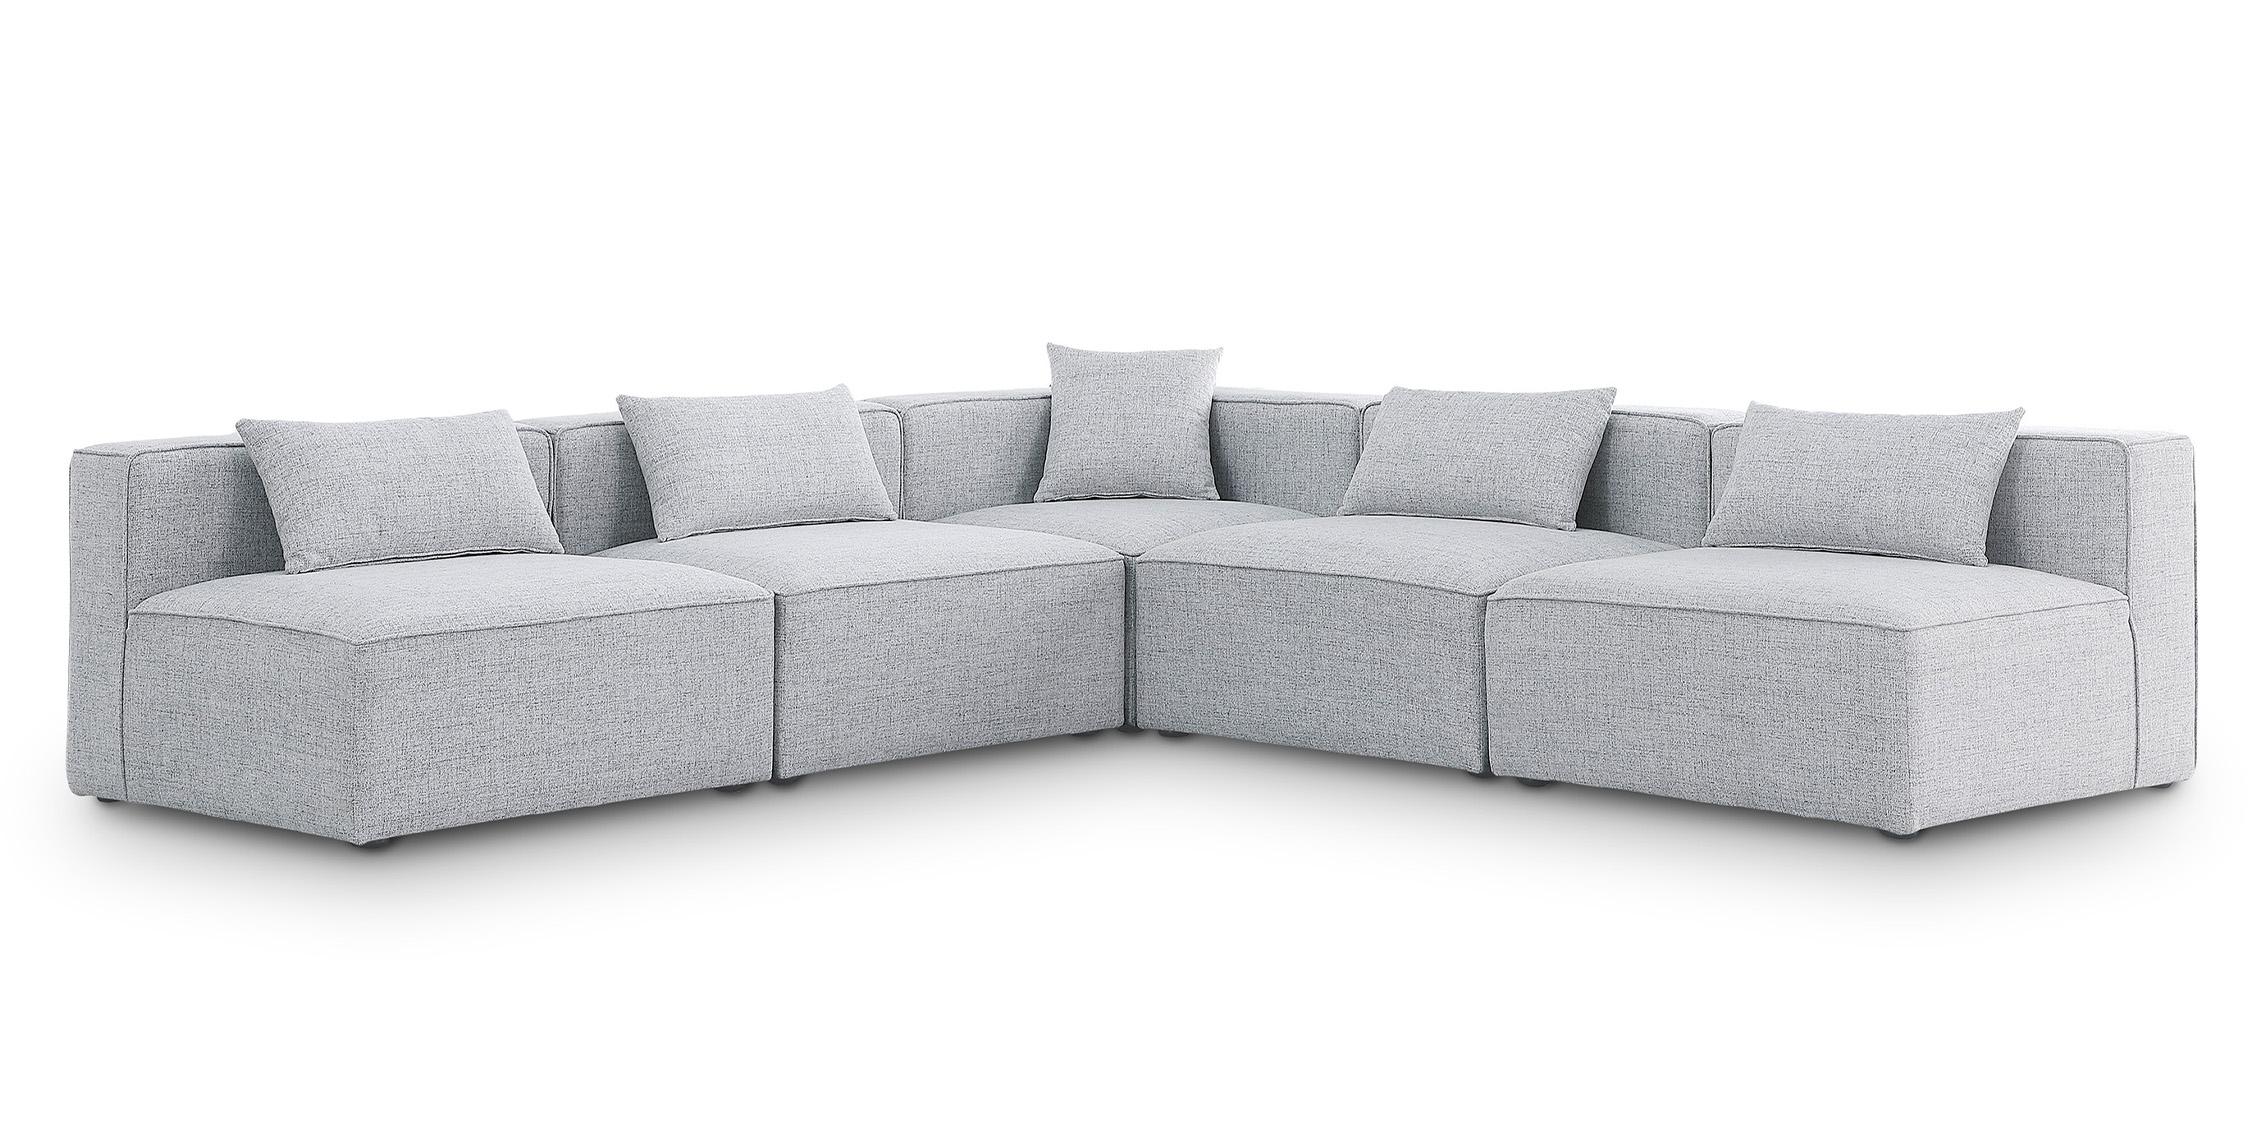 Contemporary, Modern Modular Sectional Sofa CUBE 630Grey-Sec5B 630Grey-Sec5B in Gray Linen